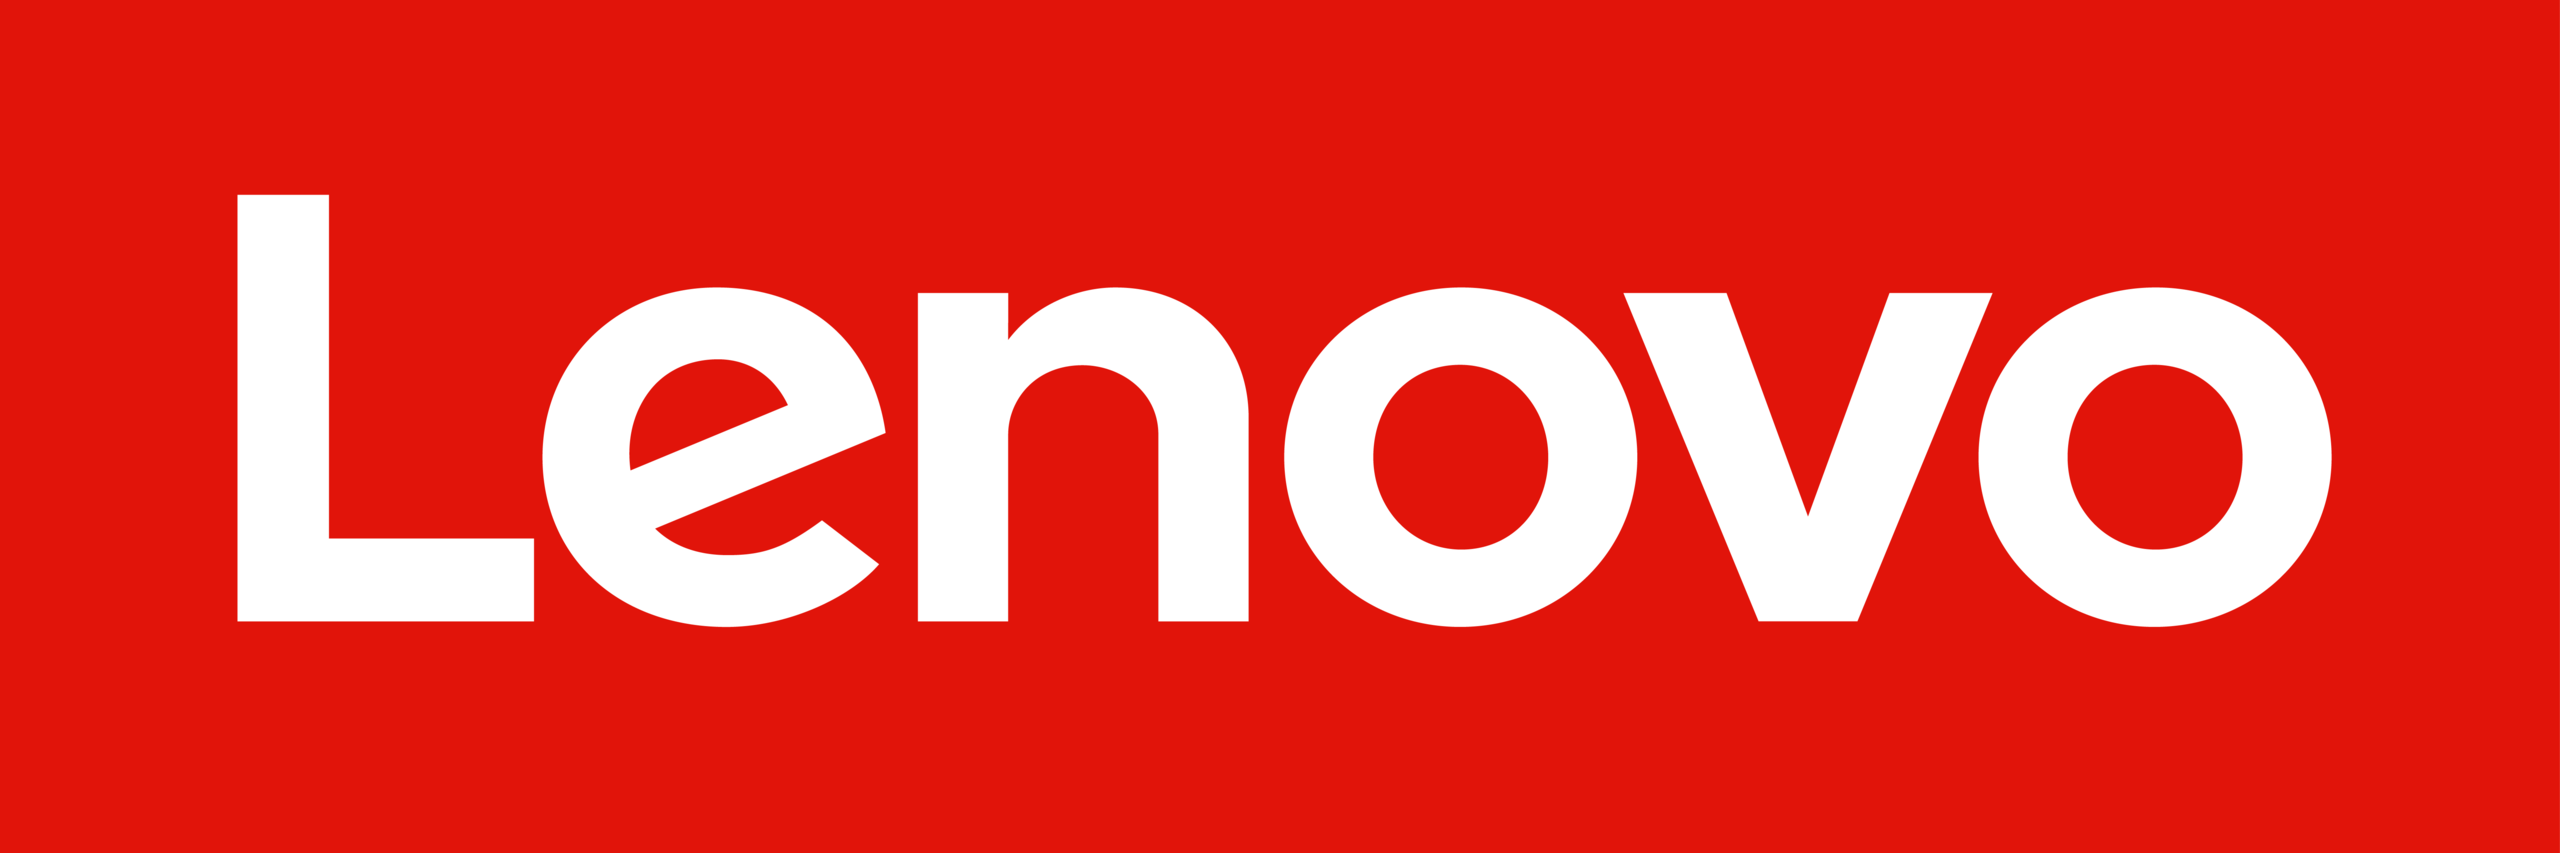 Partenariat avec Lenovo